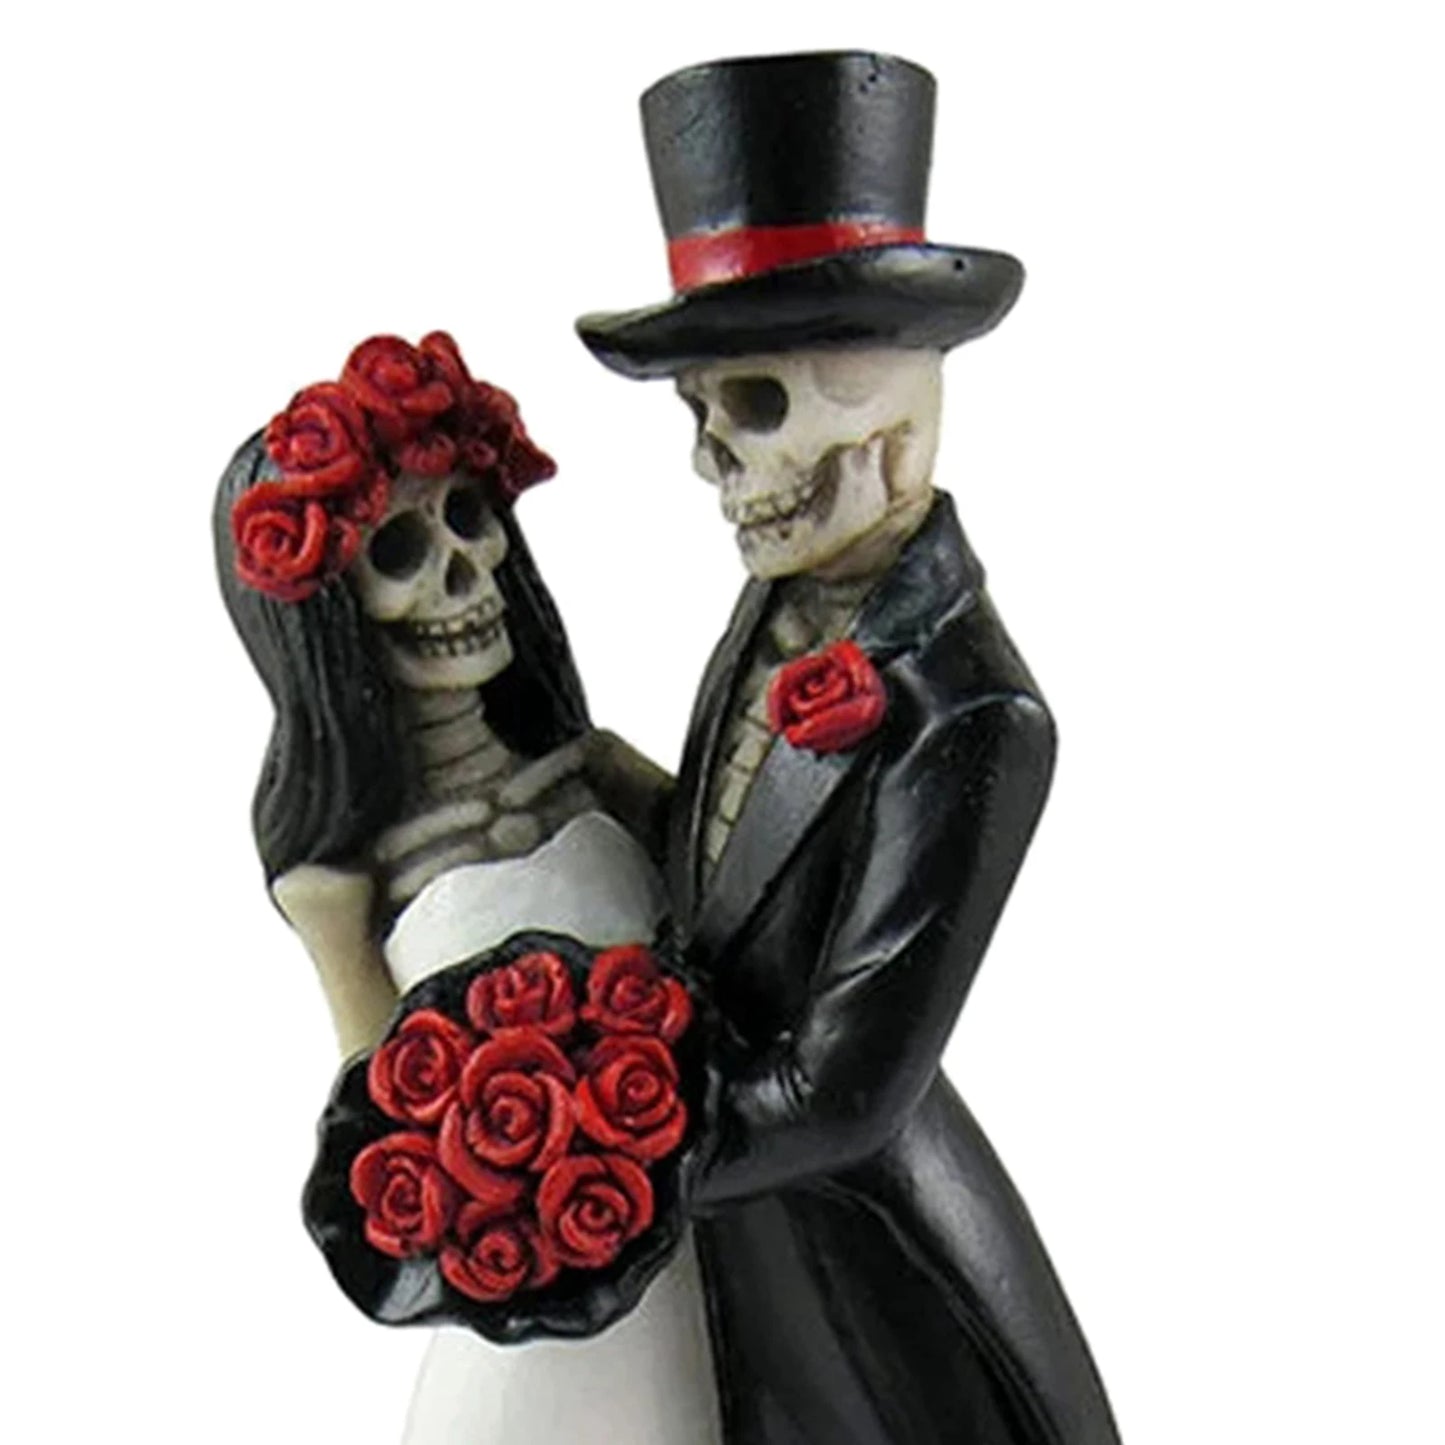 Skull Statue Skeleton Wedding Couple Bride Art for Desktop Decorations Ornaments Collectible Halloween Cake Topper